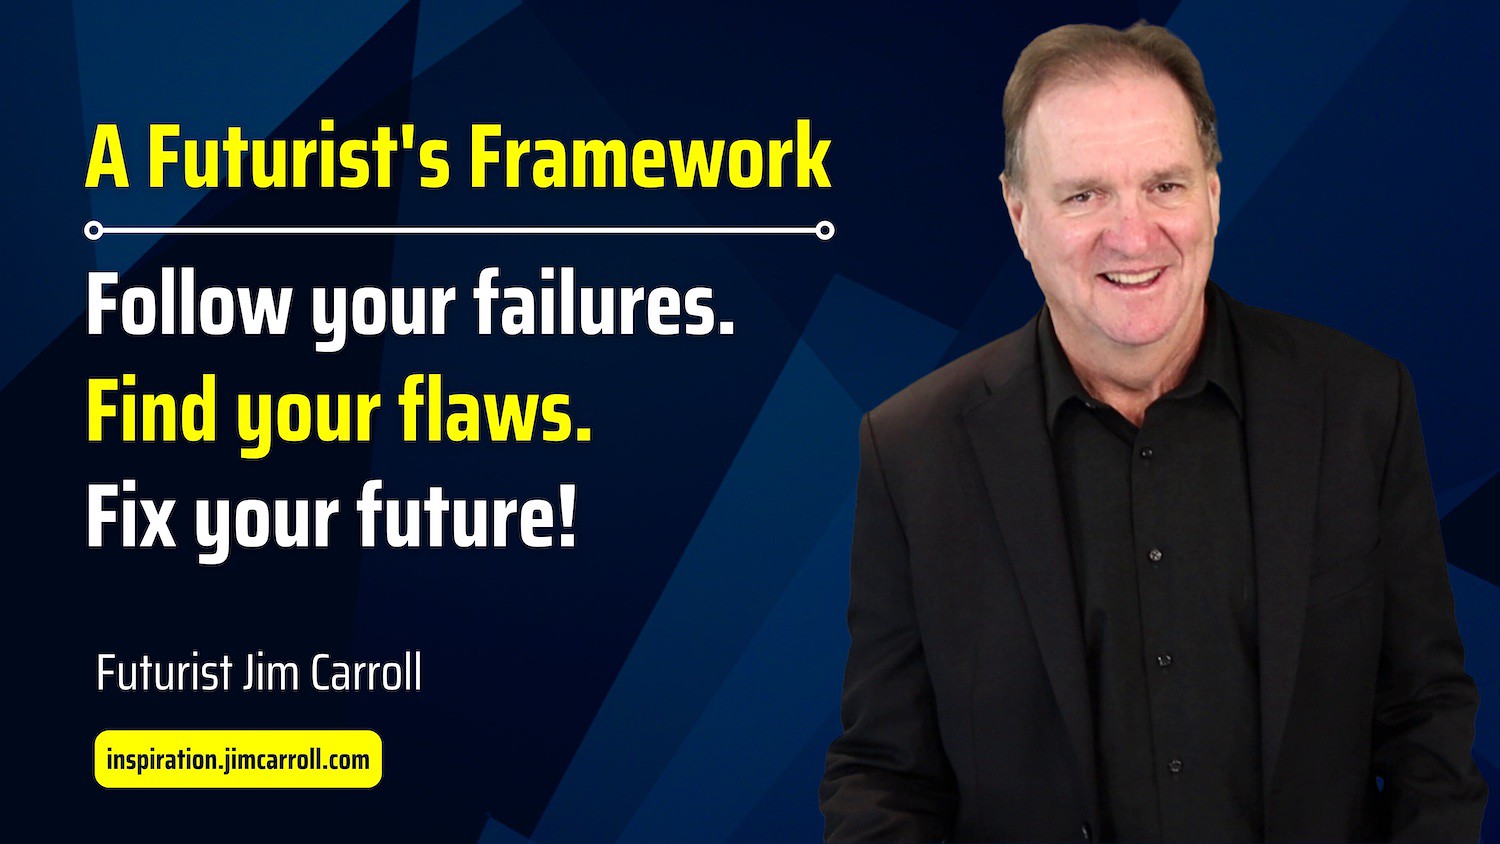 "A Futurist's Framework: Follow your failures. Find your flaws. Fix your future!" - Futurist Jim Carroll